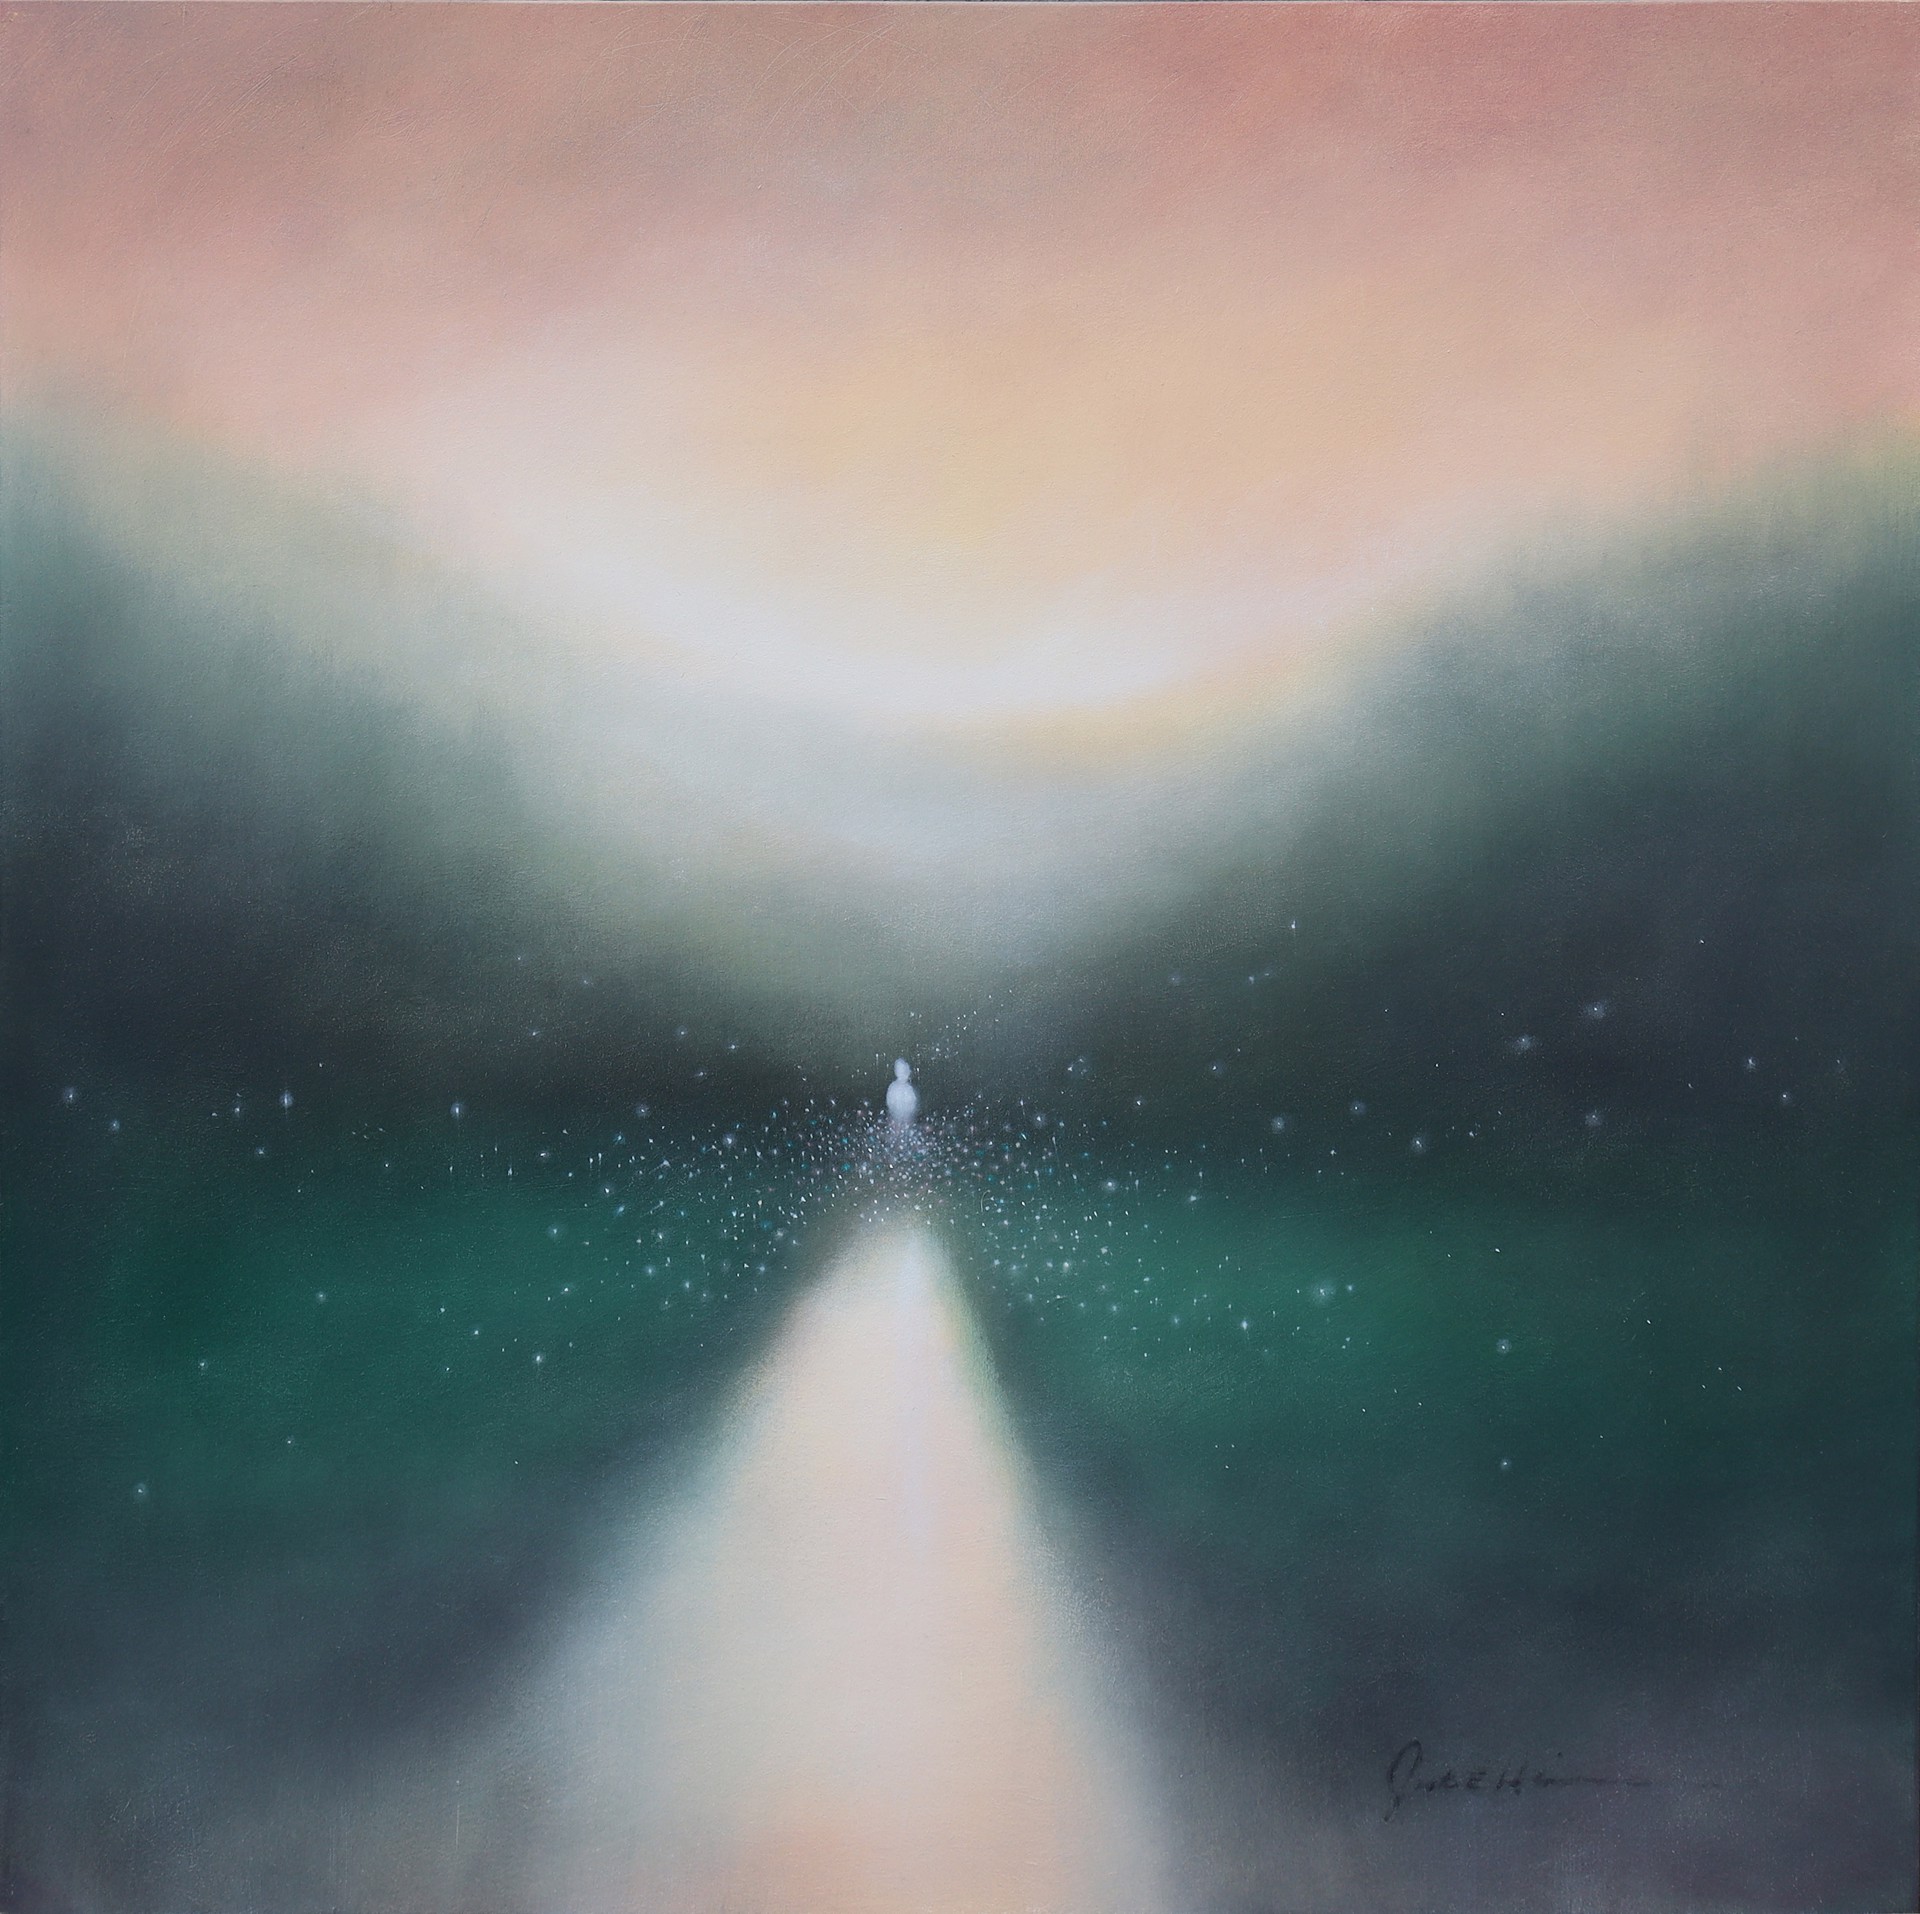 The Light Within (Spirit) by Scott E. Hill